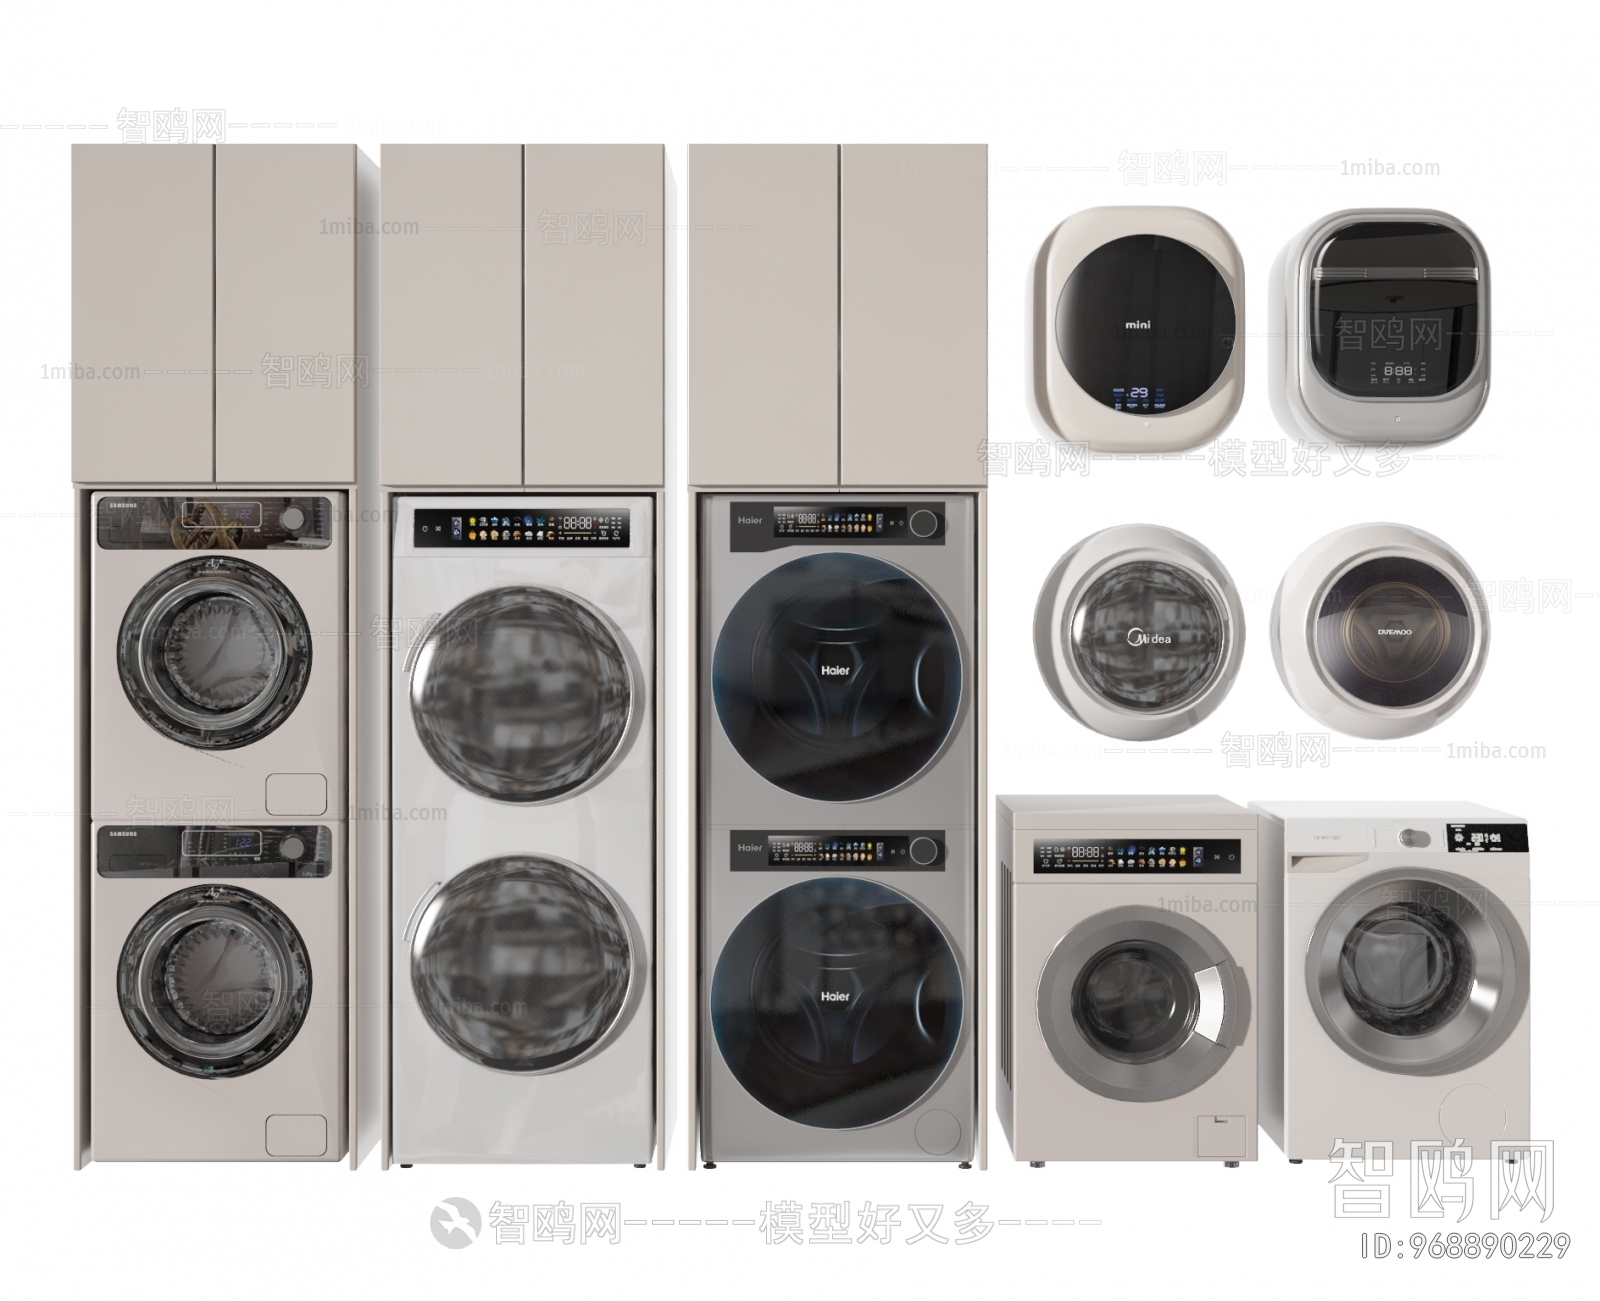 Modern Washing Machine